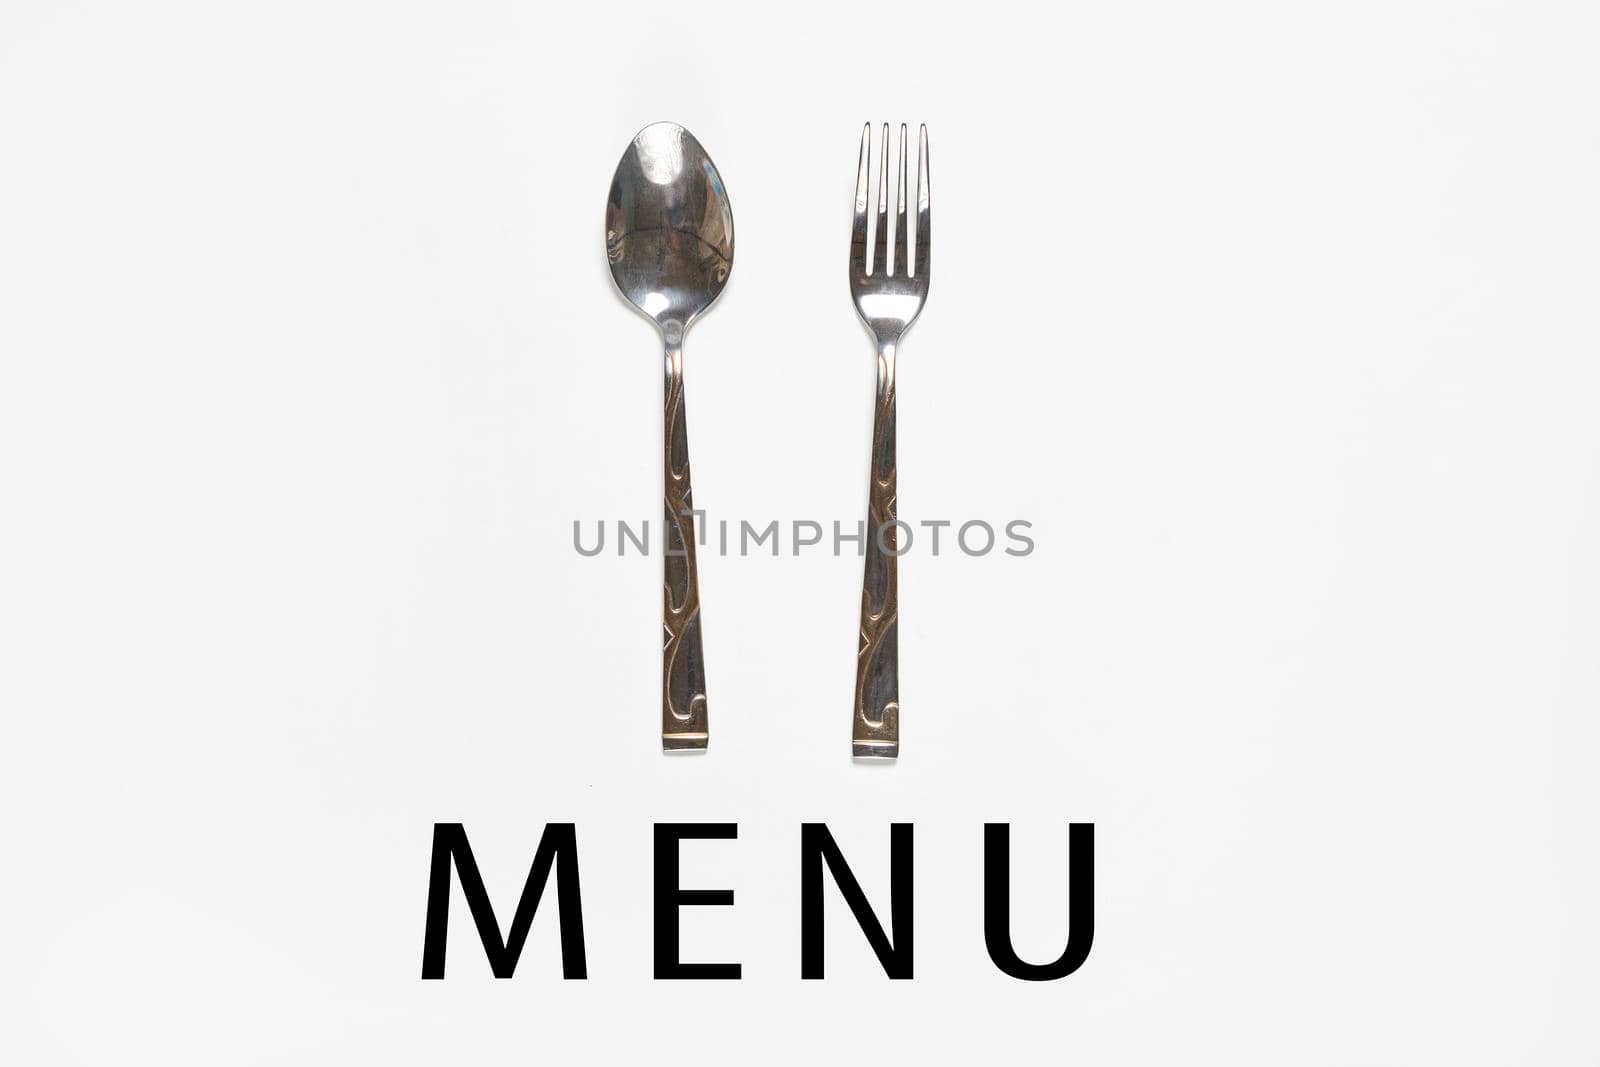 Restaurant menu - Fork, spoon and knife by golibtolibov